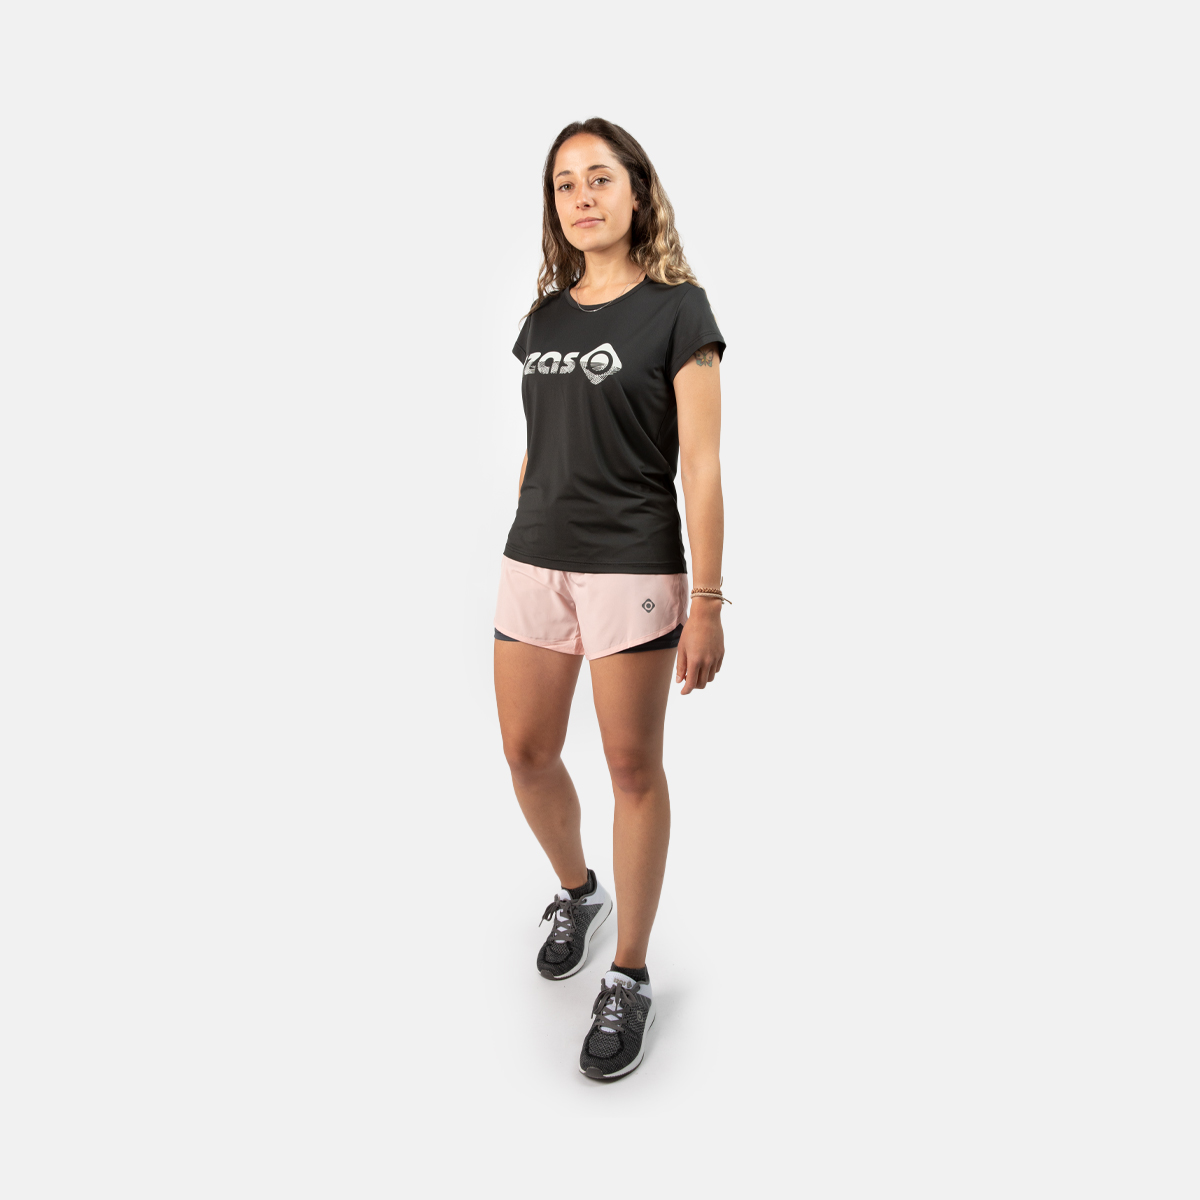 Ilico Supportive - Negro - Camiseta Fitness Mujer 